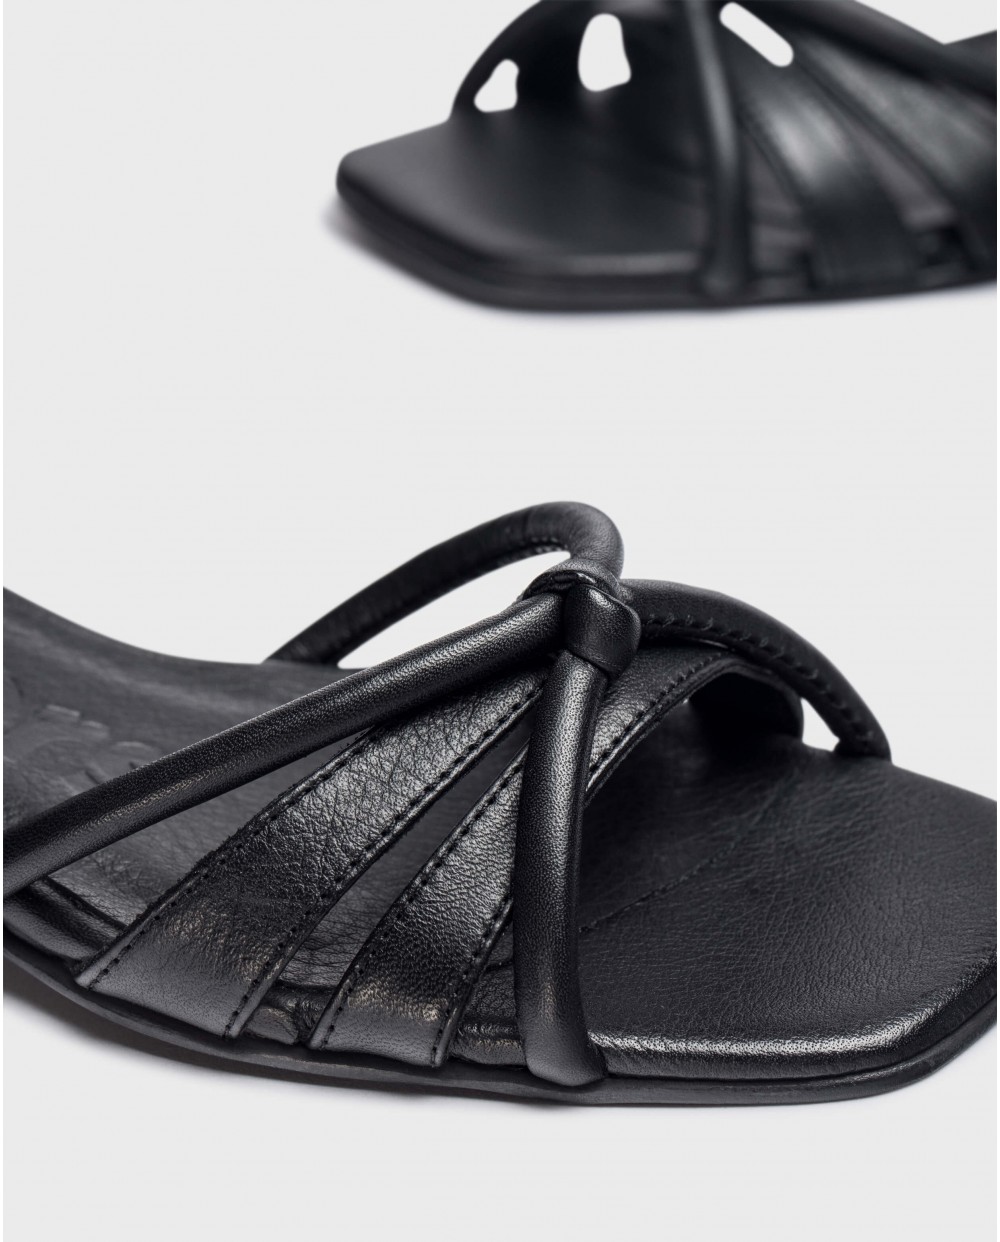 Wonders-Sandals-Black Zaida flat sandals